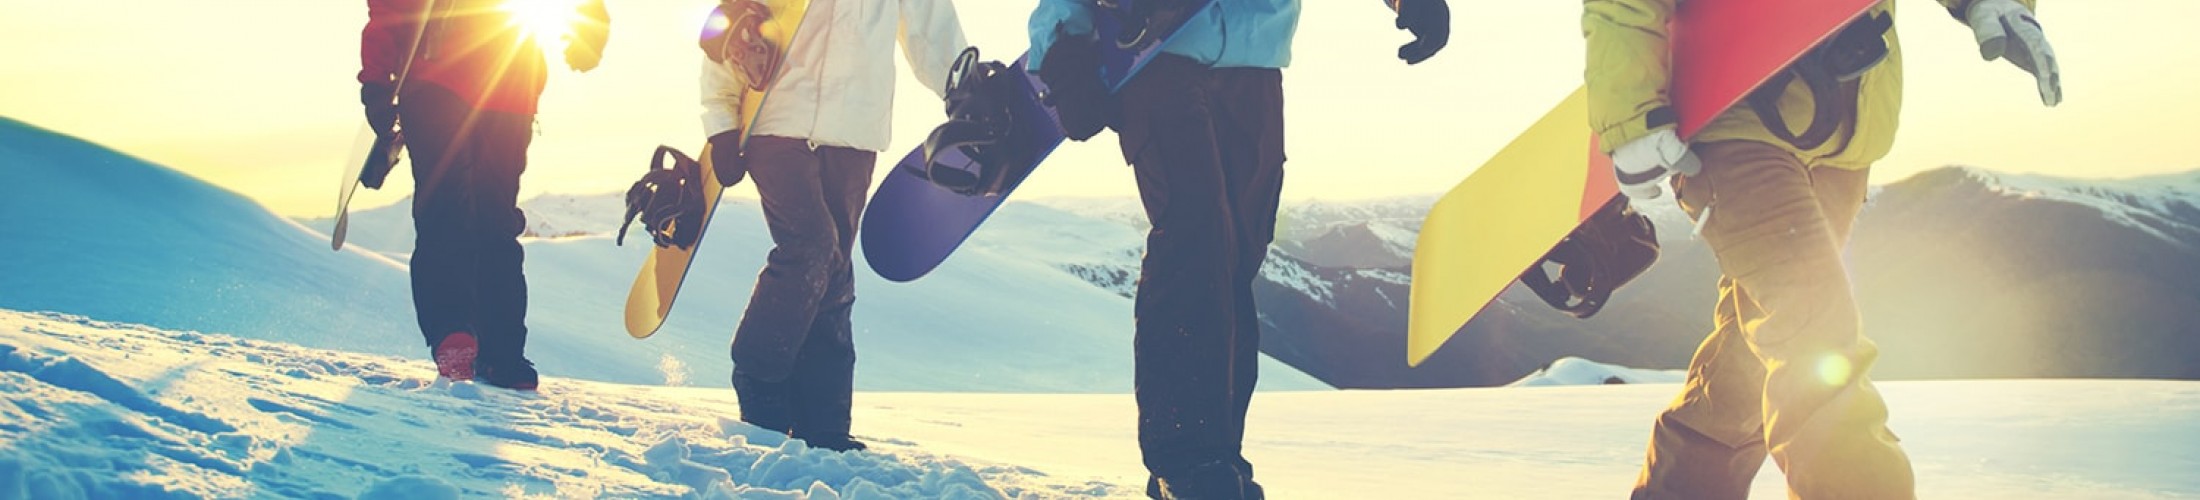 bigstock People Snowboard Winter Sport 102460568 min